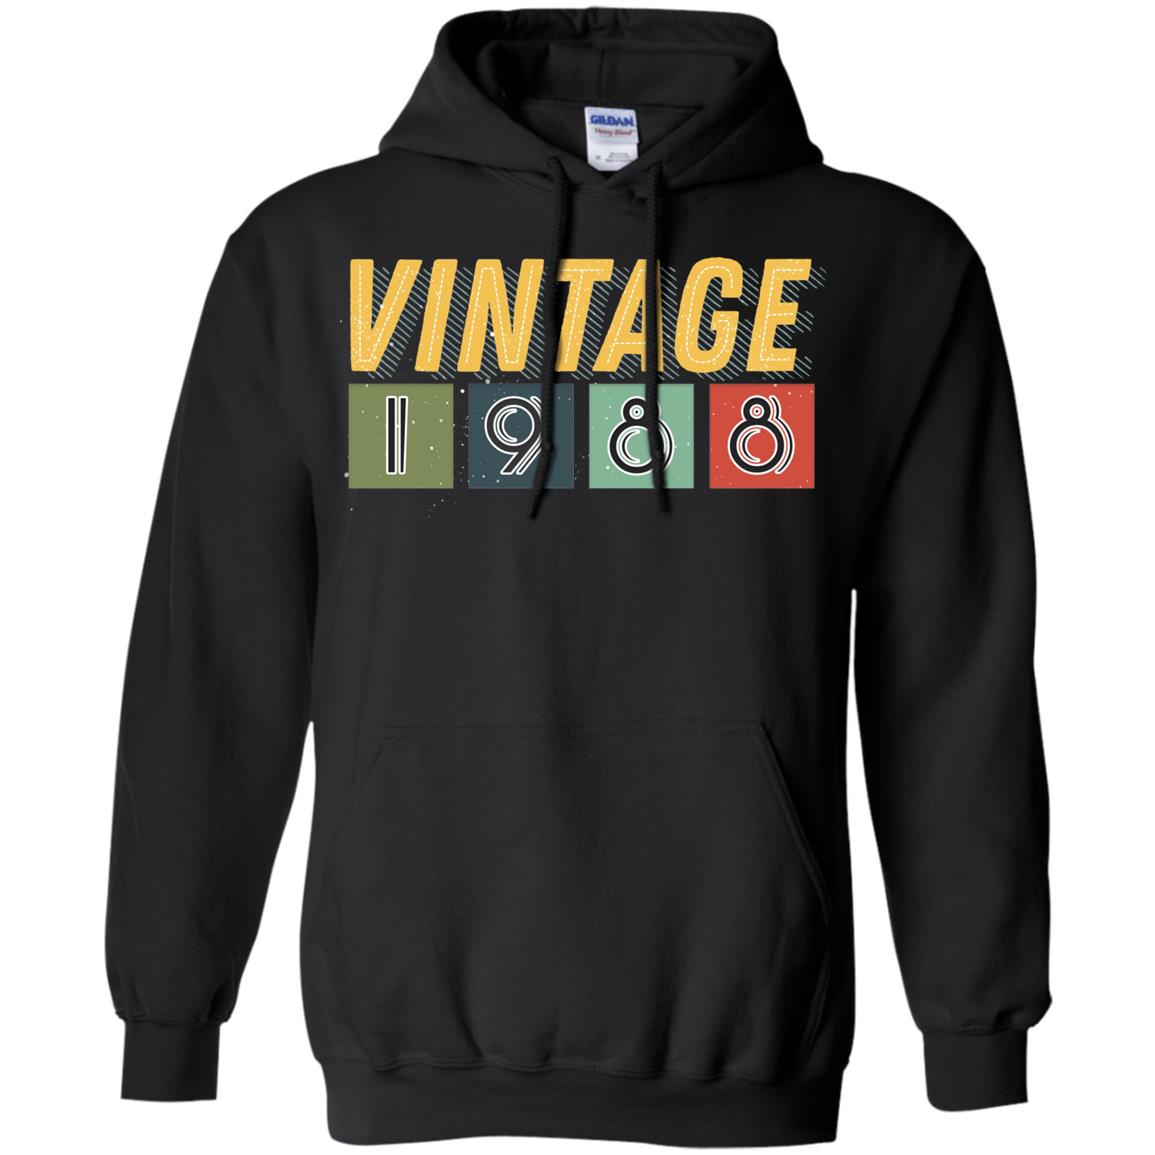 Vintage 1988 30th Birthday Gift Shirt For Mens Or WomensG185 Gildan Pullover Hoodie 8 oz.